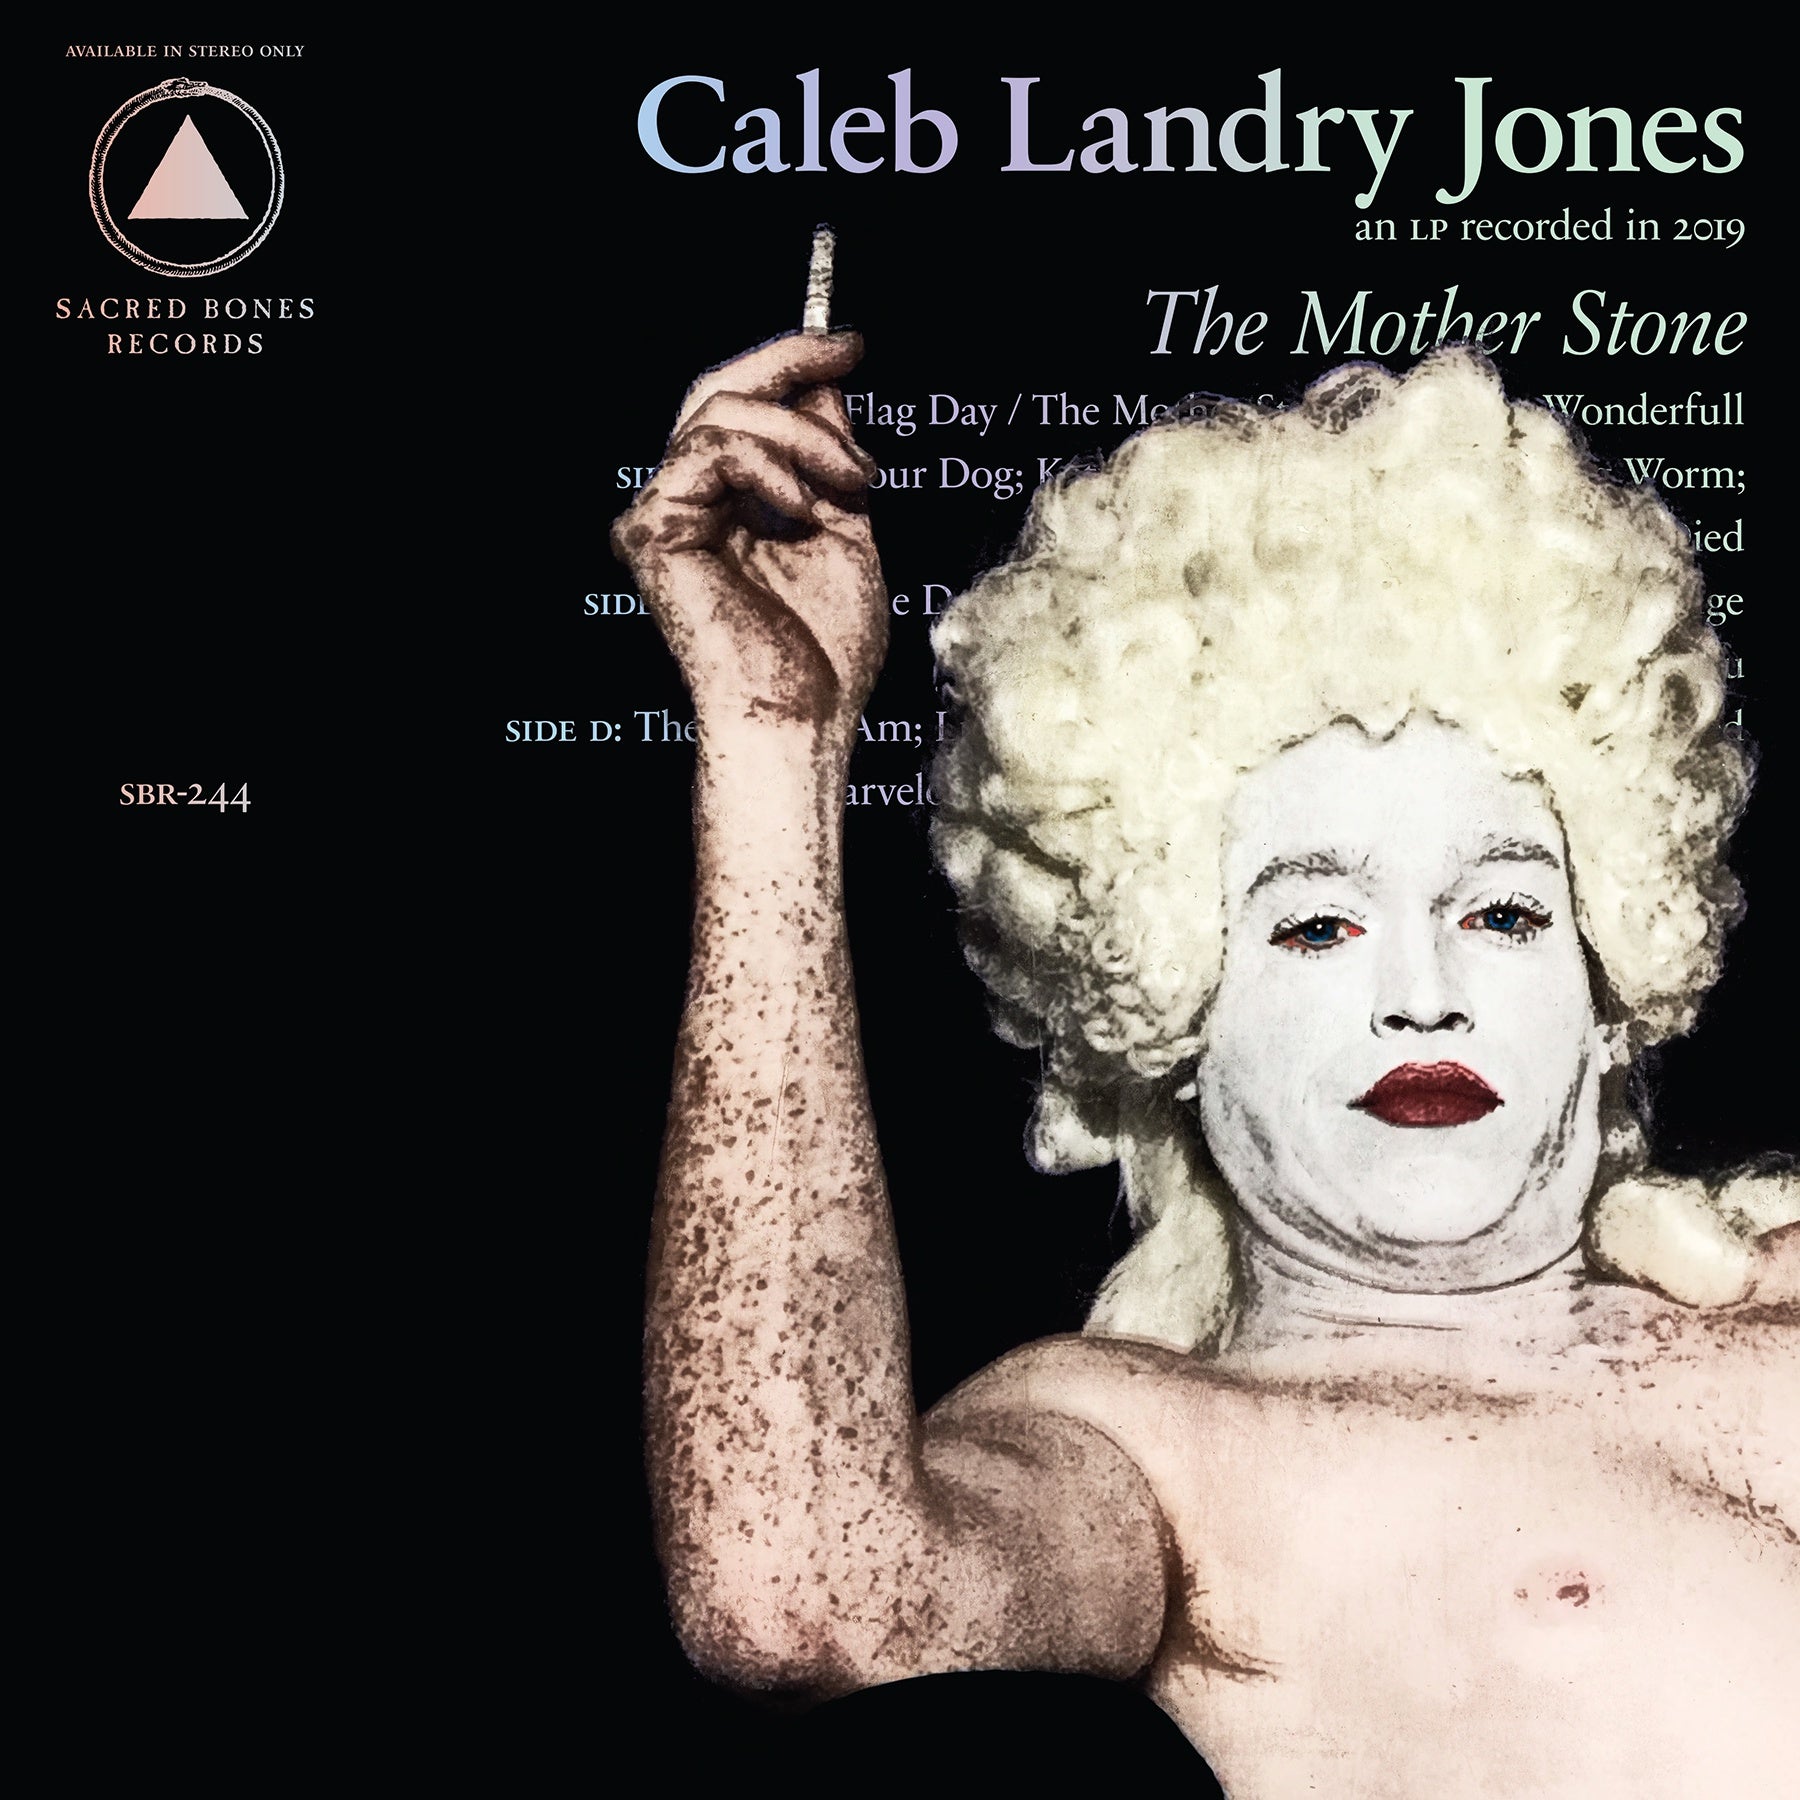 Caleb Landry Jones - The Mother Stone - New 2 LP Record 2020 Sacred Bones Baby Blue Vinyl - Psychedelic Rock / Pop